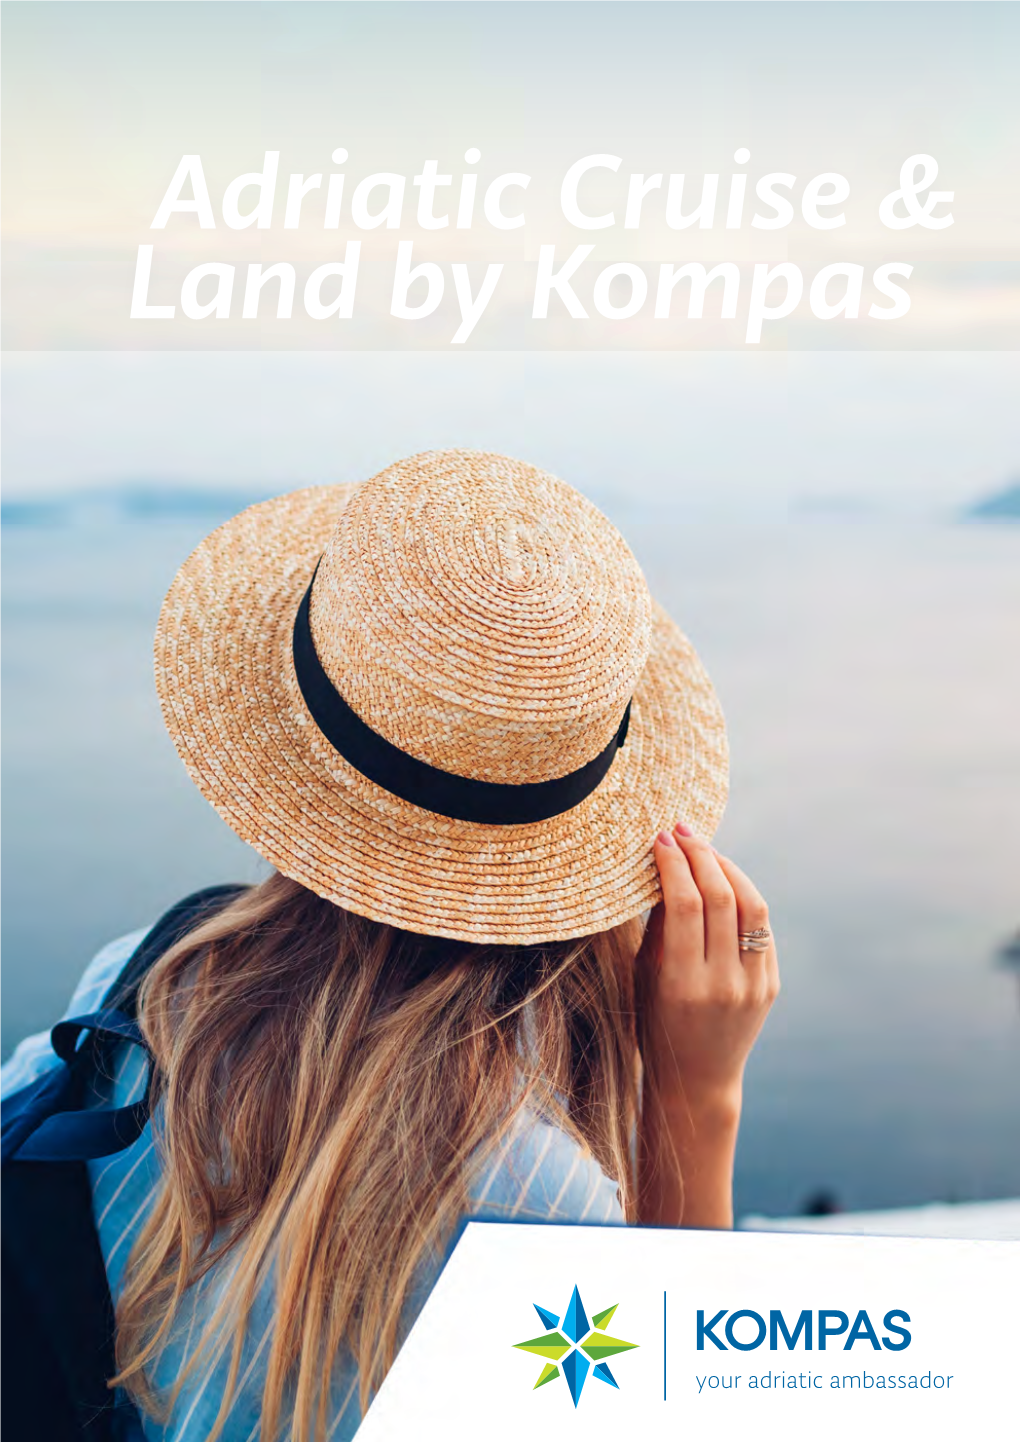 Adriatic Cruise & Land by Kompas